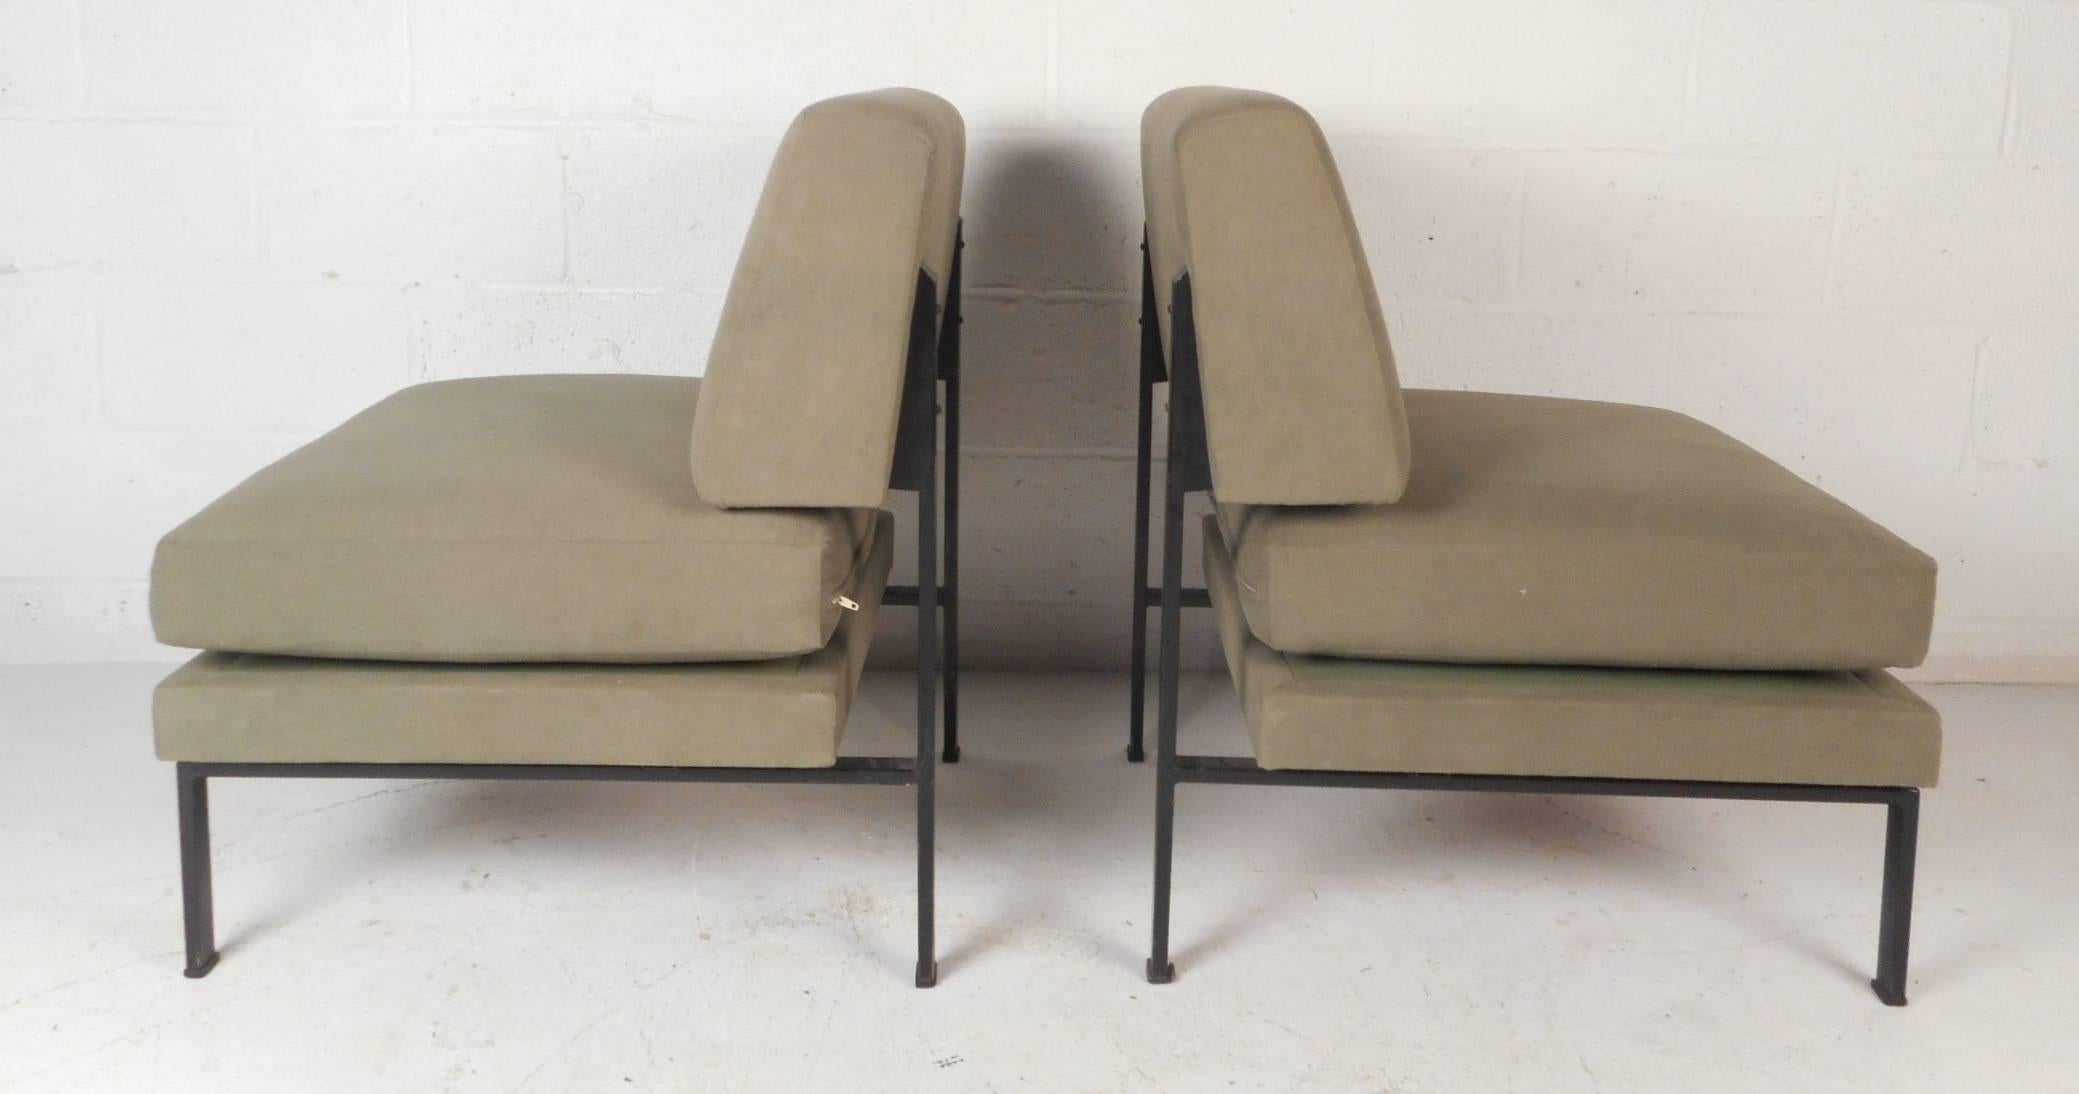 Upholstery Pair of Mid-Century Modern Italian Trafilisa Lounge Chairs with Adjustable Seats